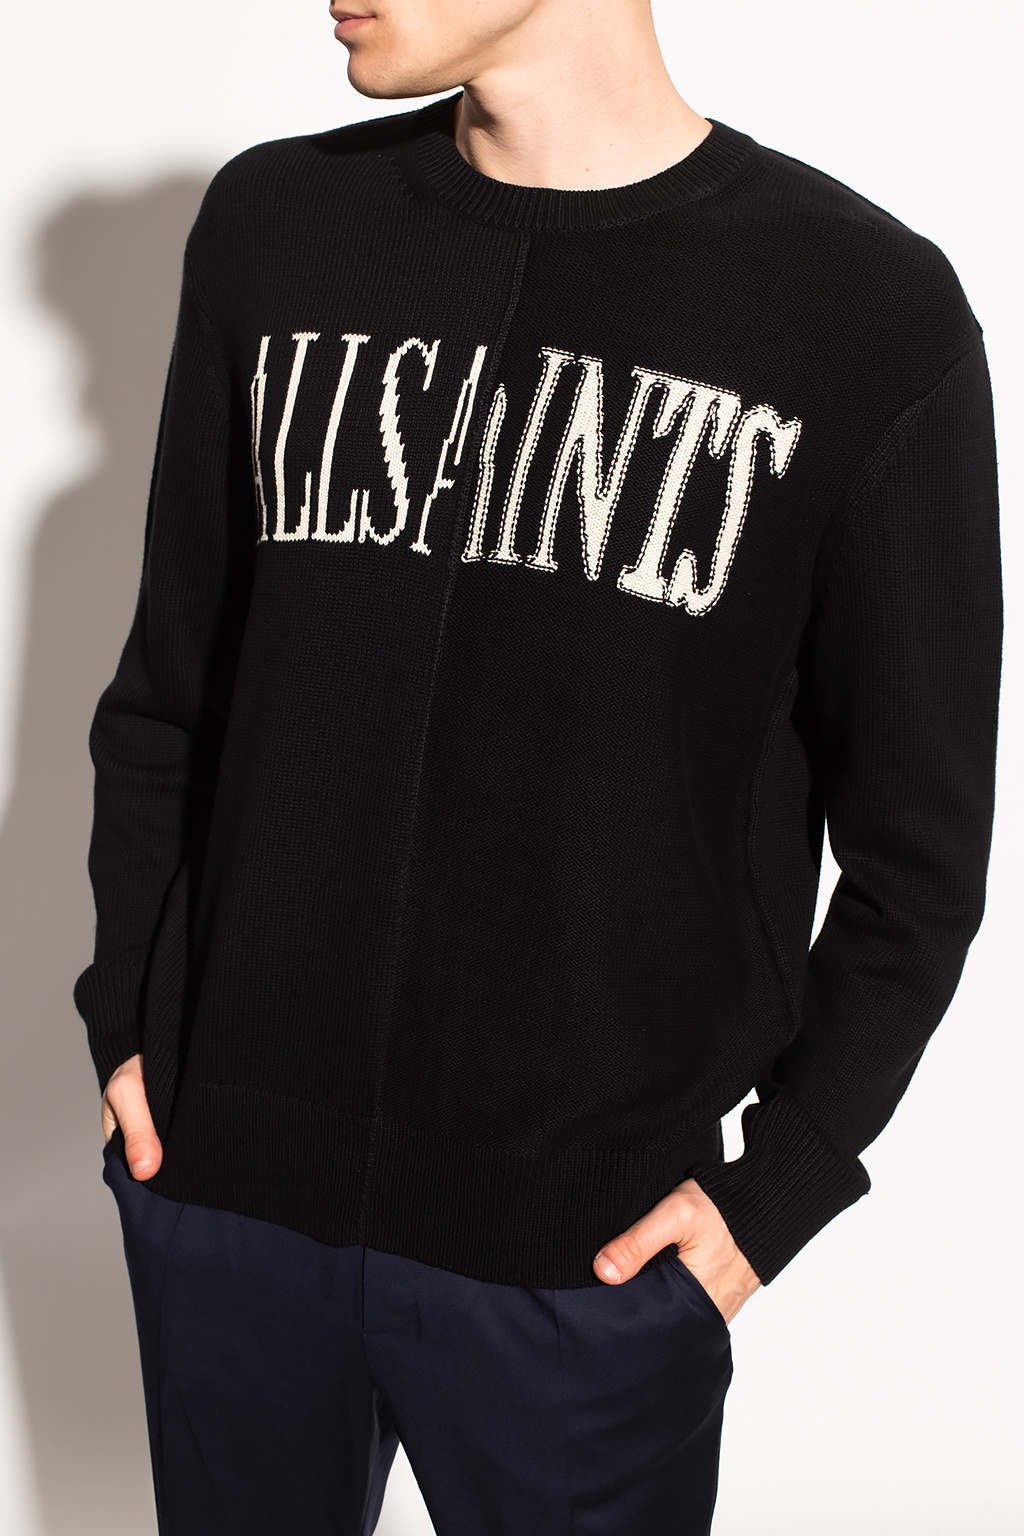 IetpShops KR - Black 'Axis' sweater logo AllSaints - s patent leather jacket Blau